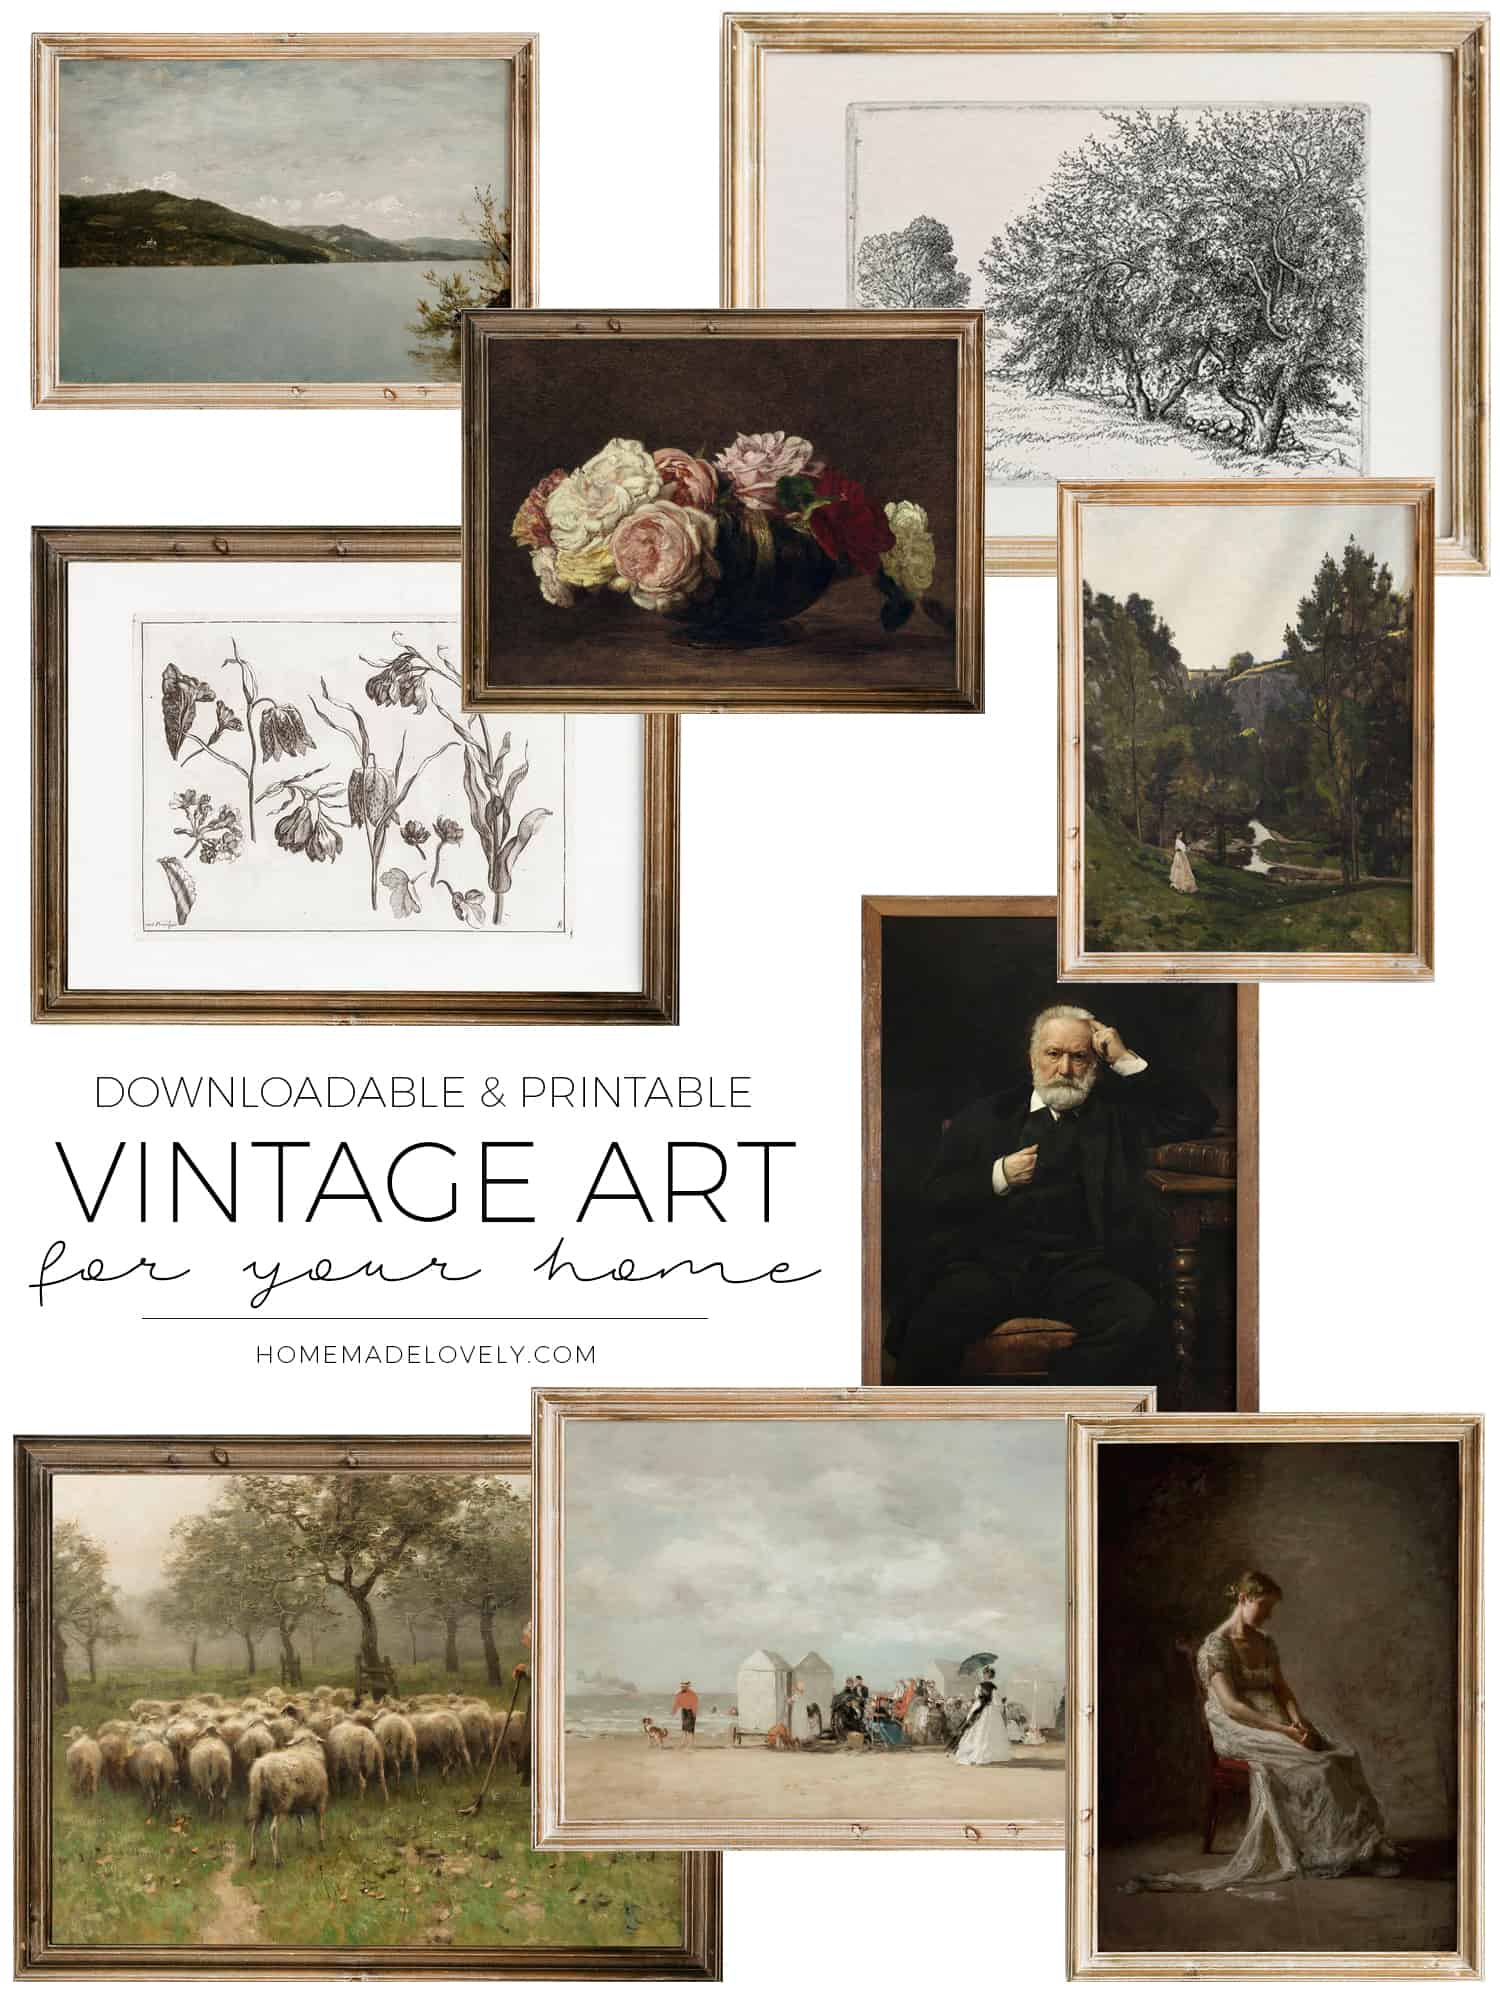 Downloadable Vintage Art For Your Home - Free Printable Images Vintage